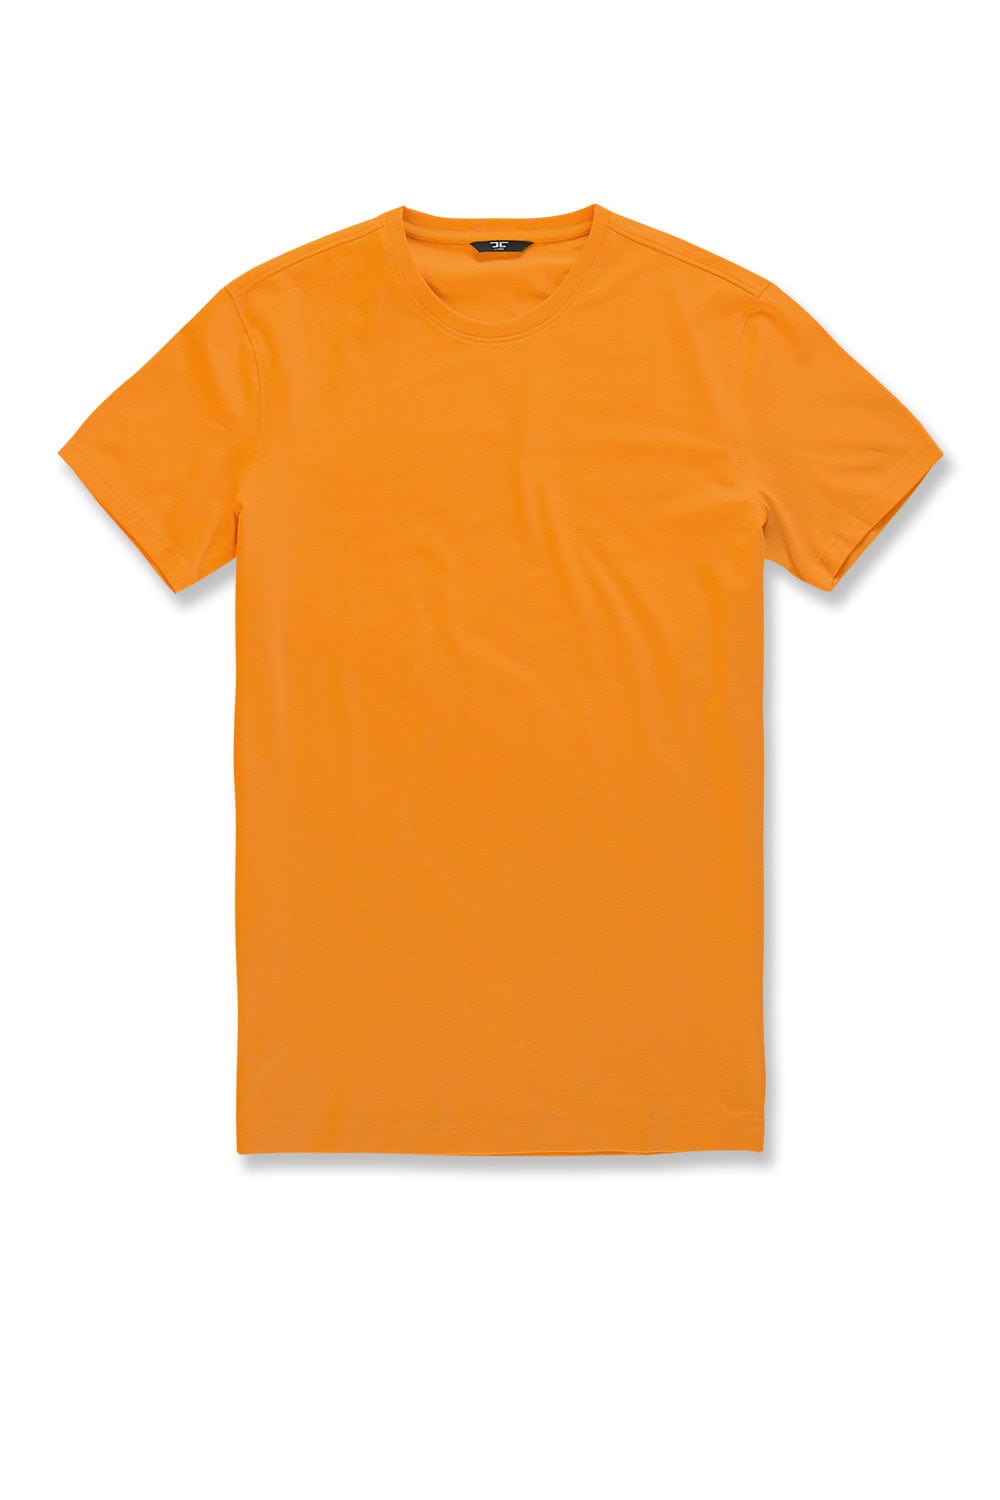 JC Big Men Big Men's Premium Crewneck T-Shirt (University Gold) 4XL / University Gold / CAB11